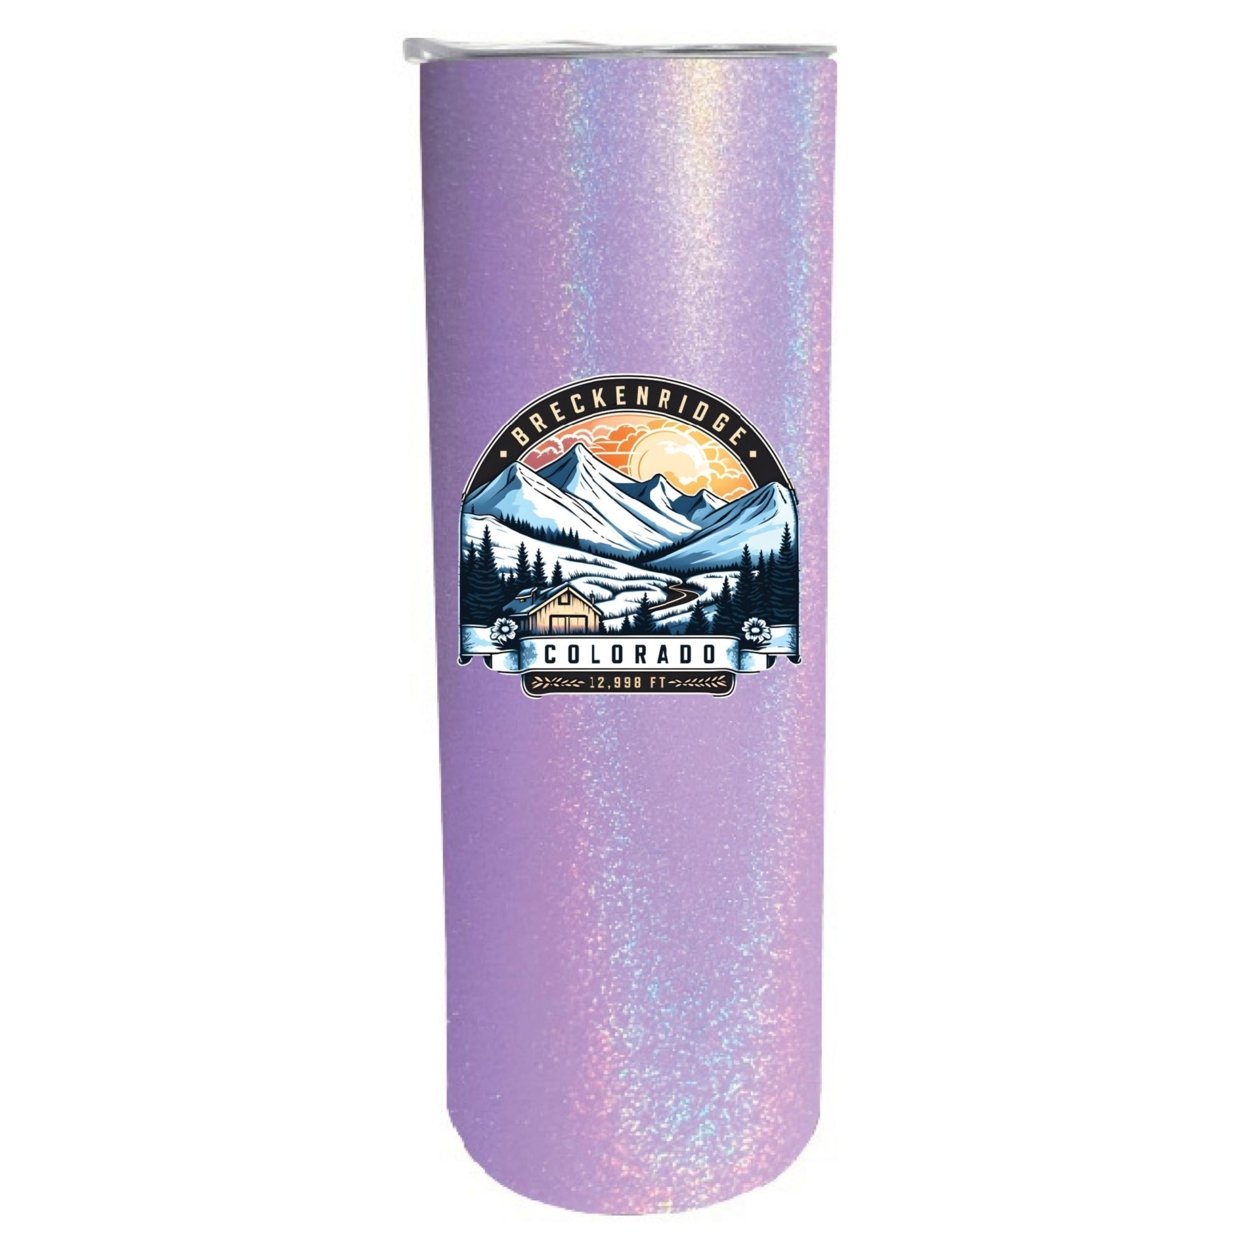 Breckenridge Colorado Souvenir 20 Oz Insulated Stainless Steel Skinny Tumbler - Pink Glitter